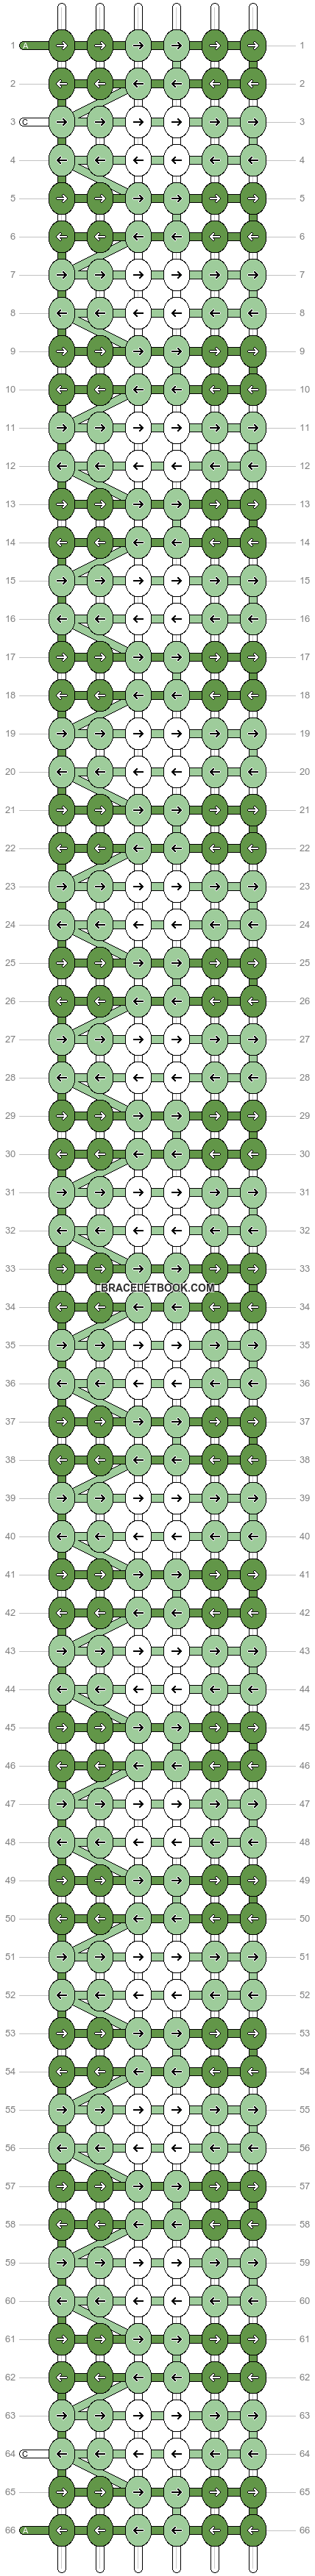 Alpha pattern #80755 variation #146879 pattern